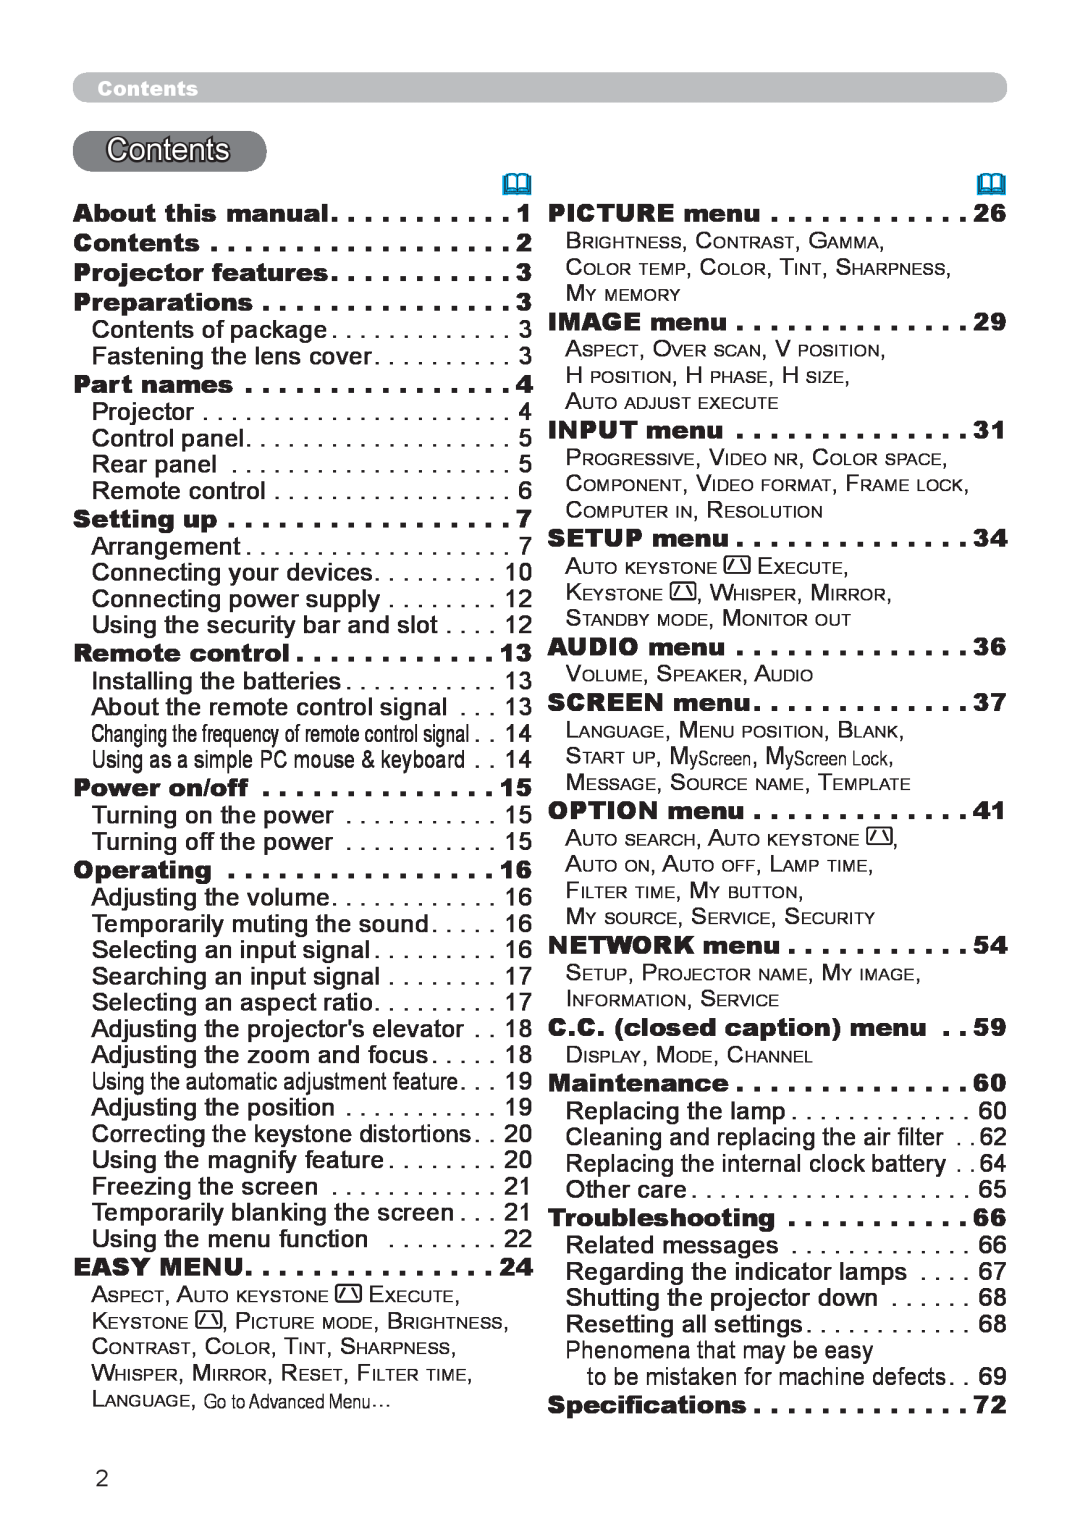 Hitachi CP-X206 Contents, About this manual, PICTURE menu, Projector features, Preparations, IMAGE menu, Part names 